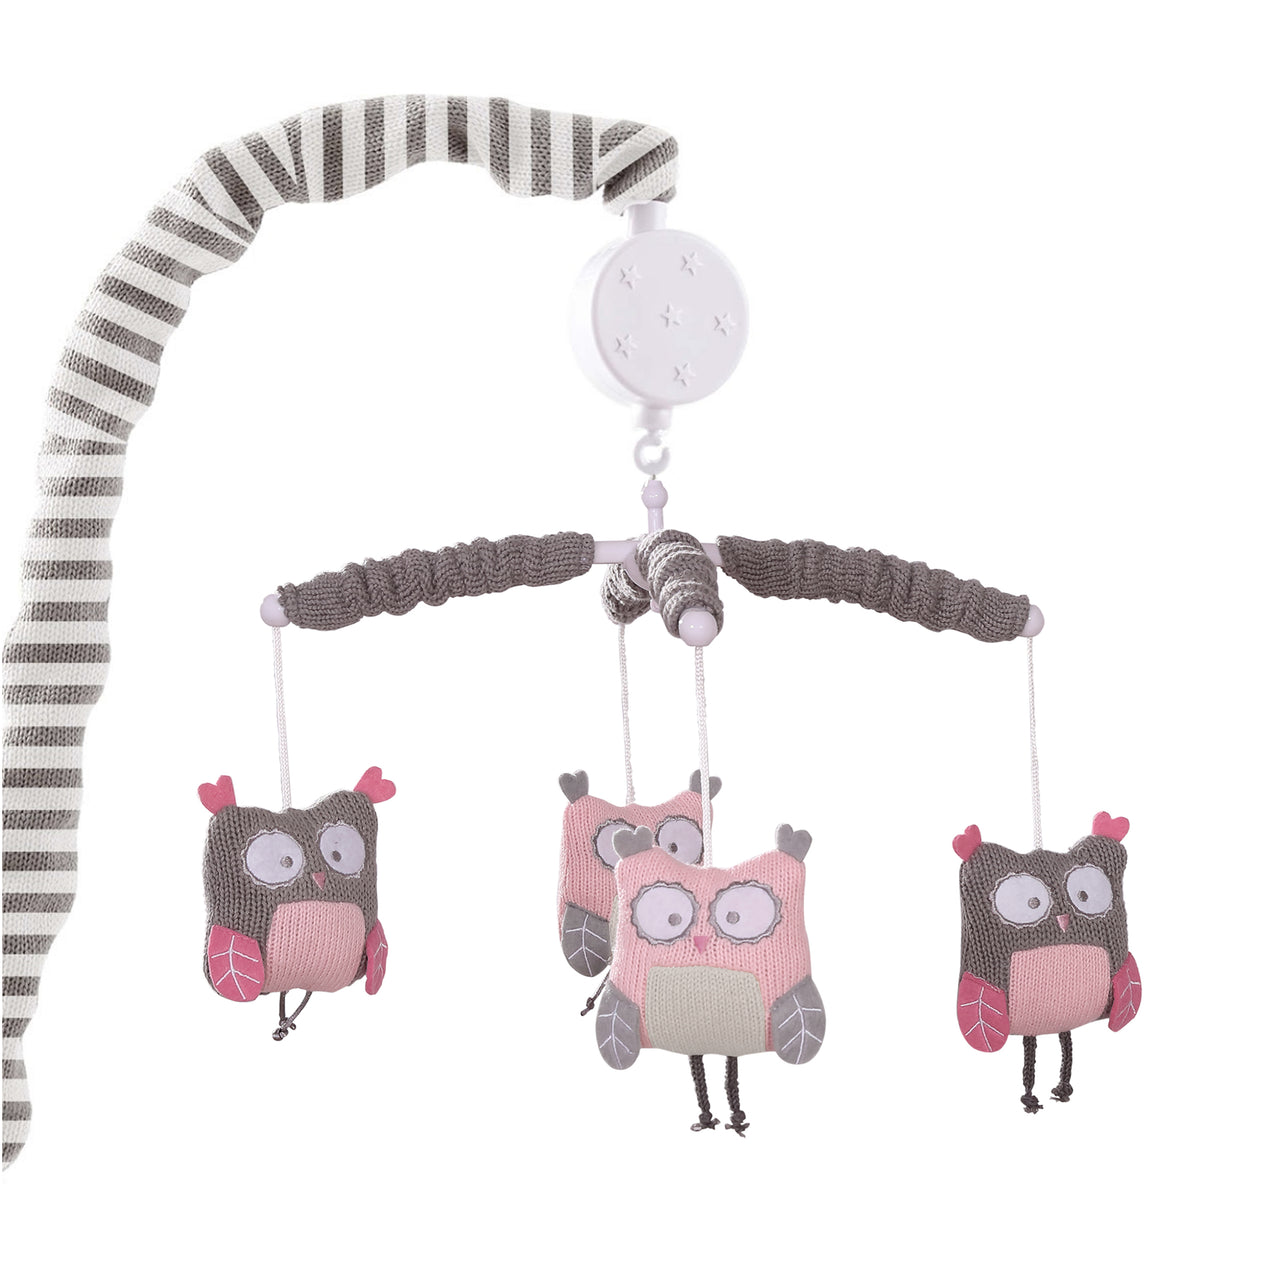 Night Owl Musical Mobile - Pink